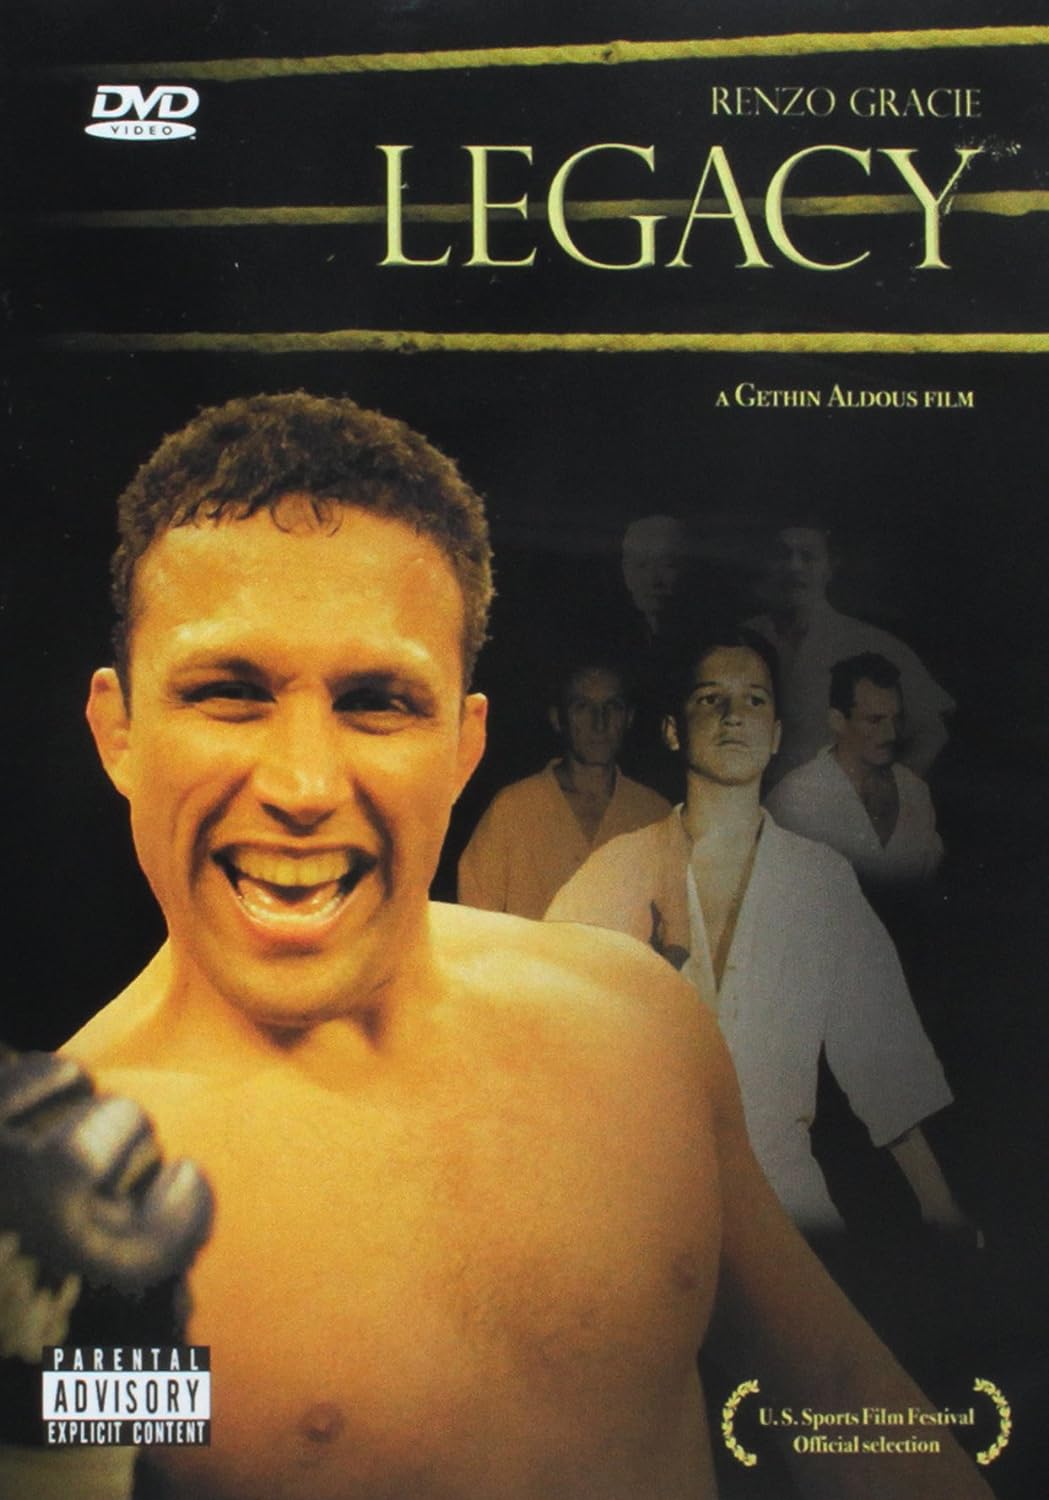 Renzo Gracie Legacy DVD (Preowned)